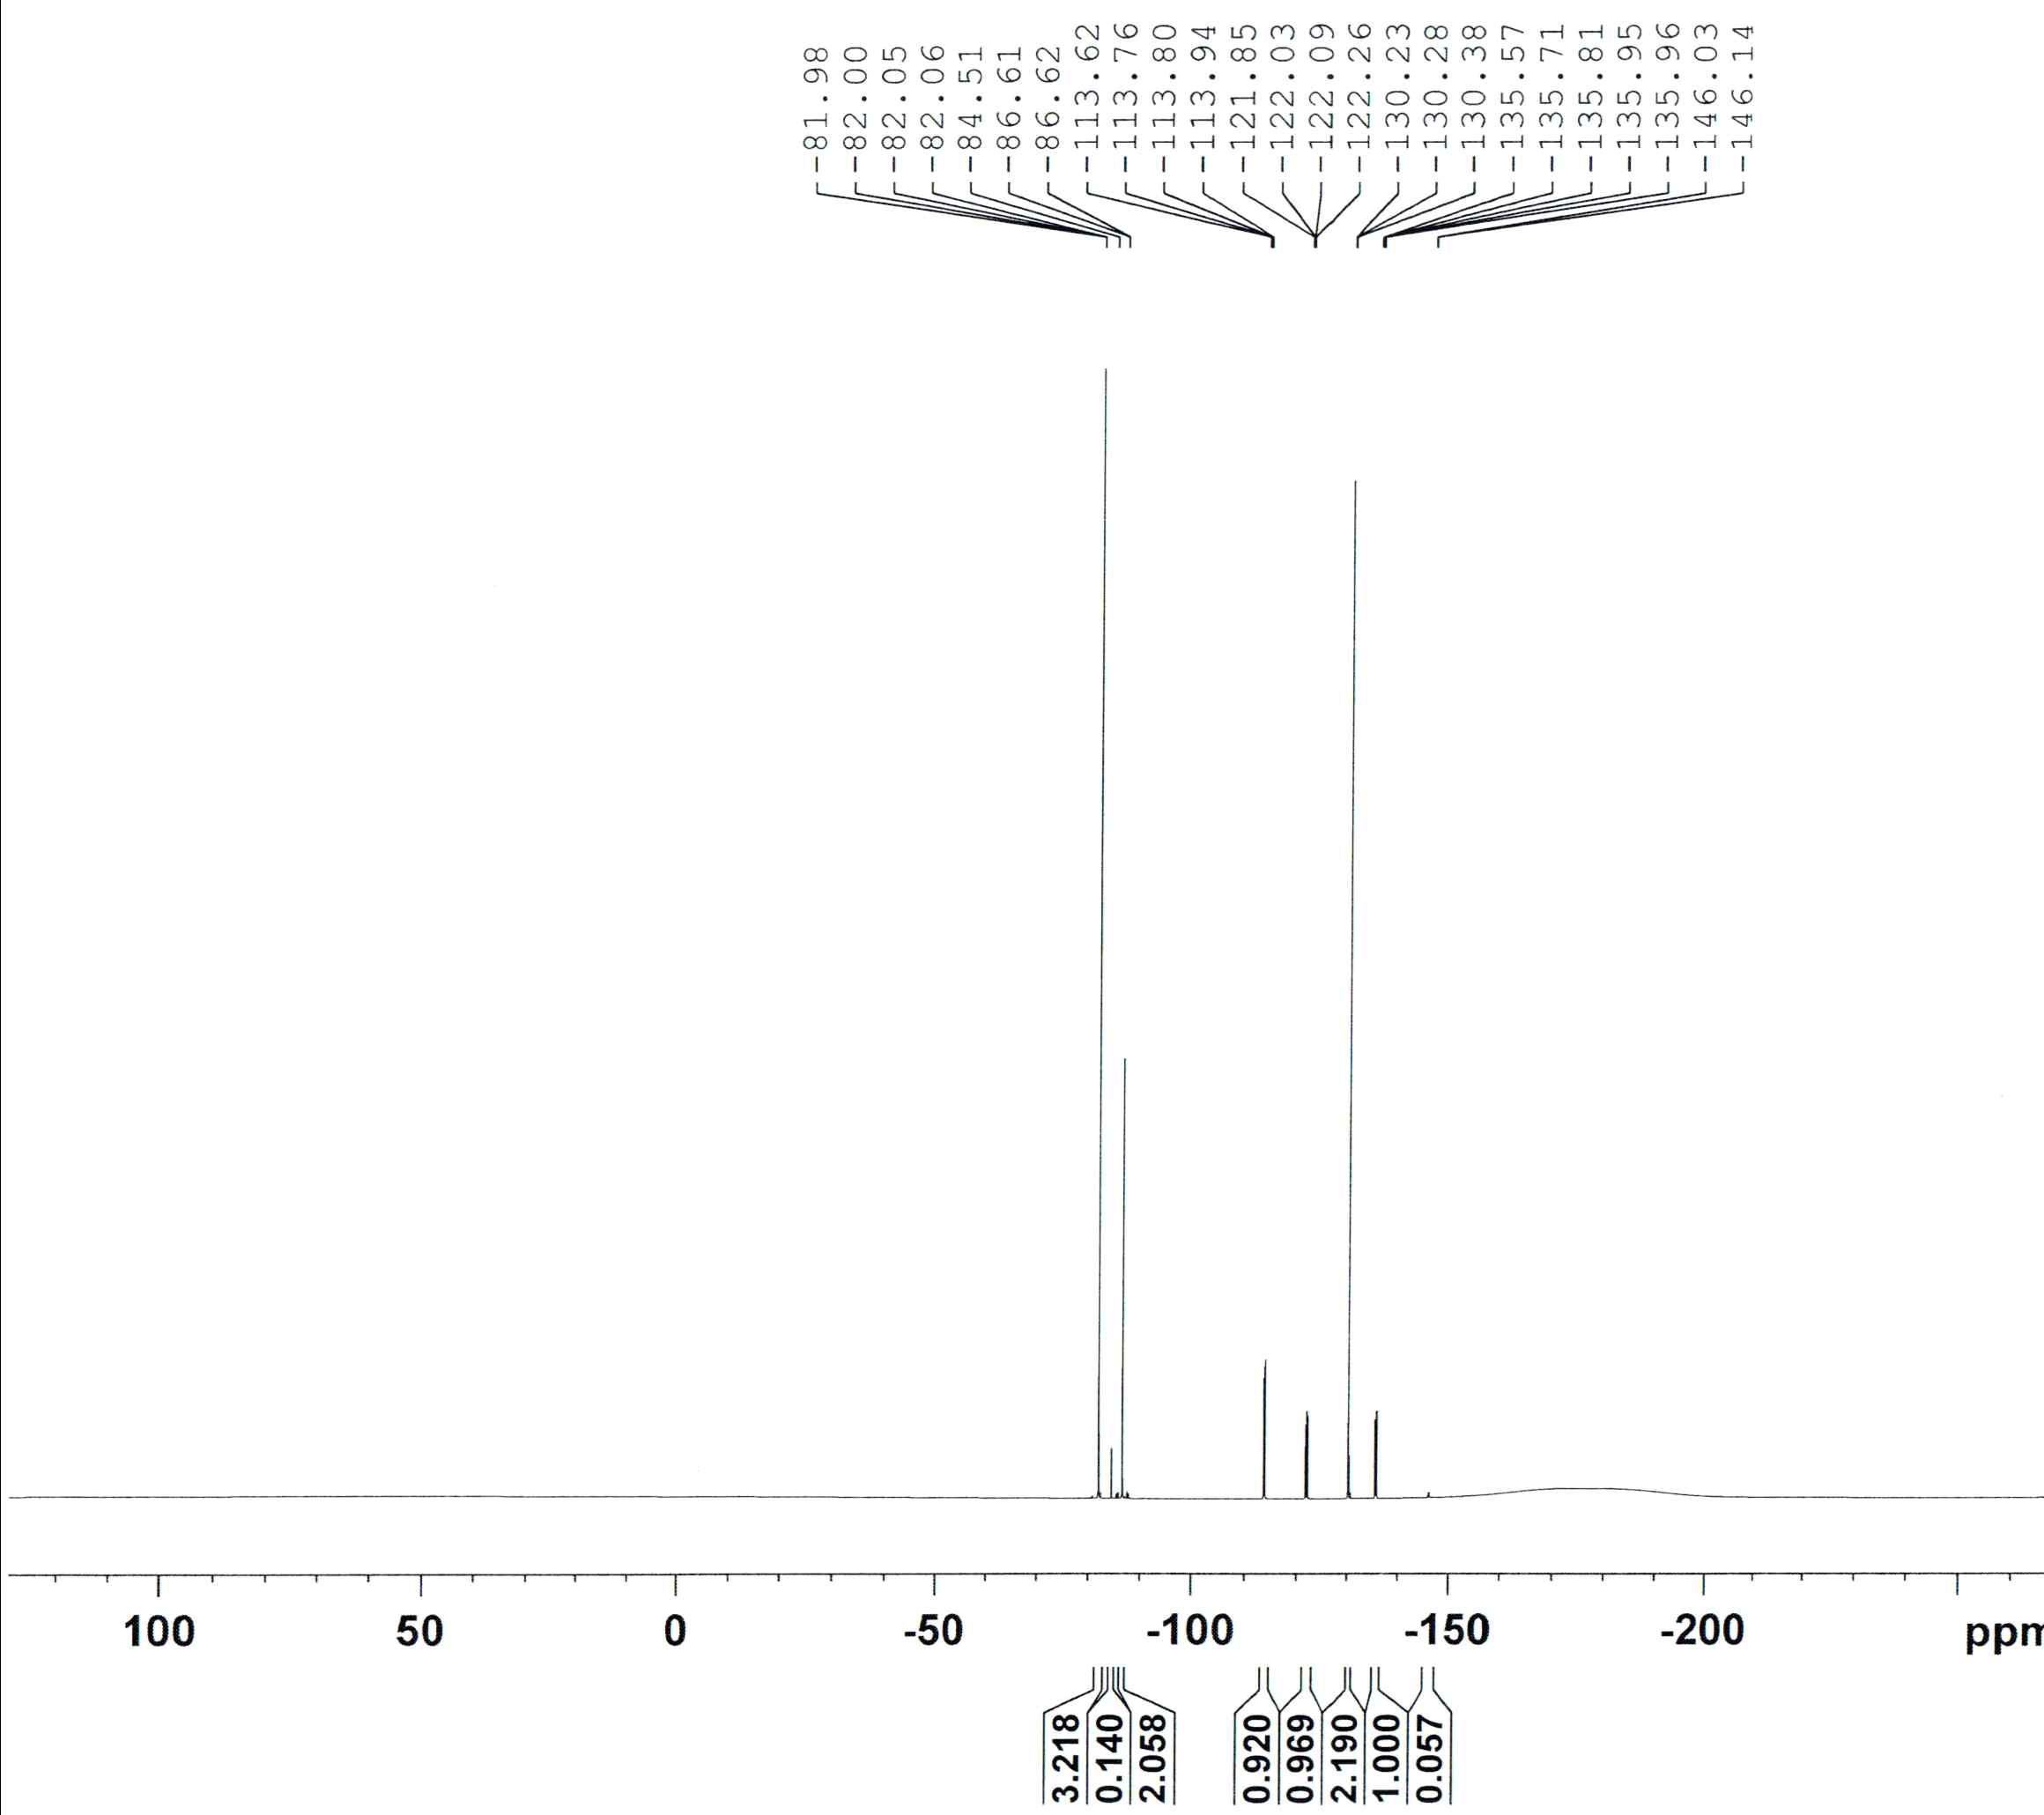 HFVE(Ⅳ)의 19F NMR data